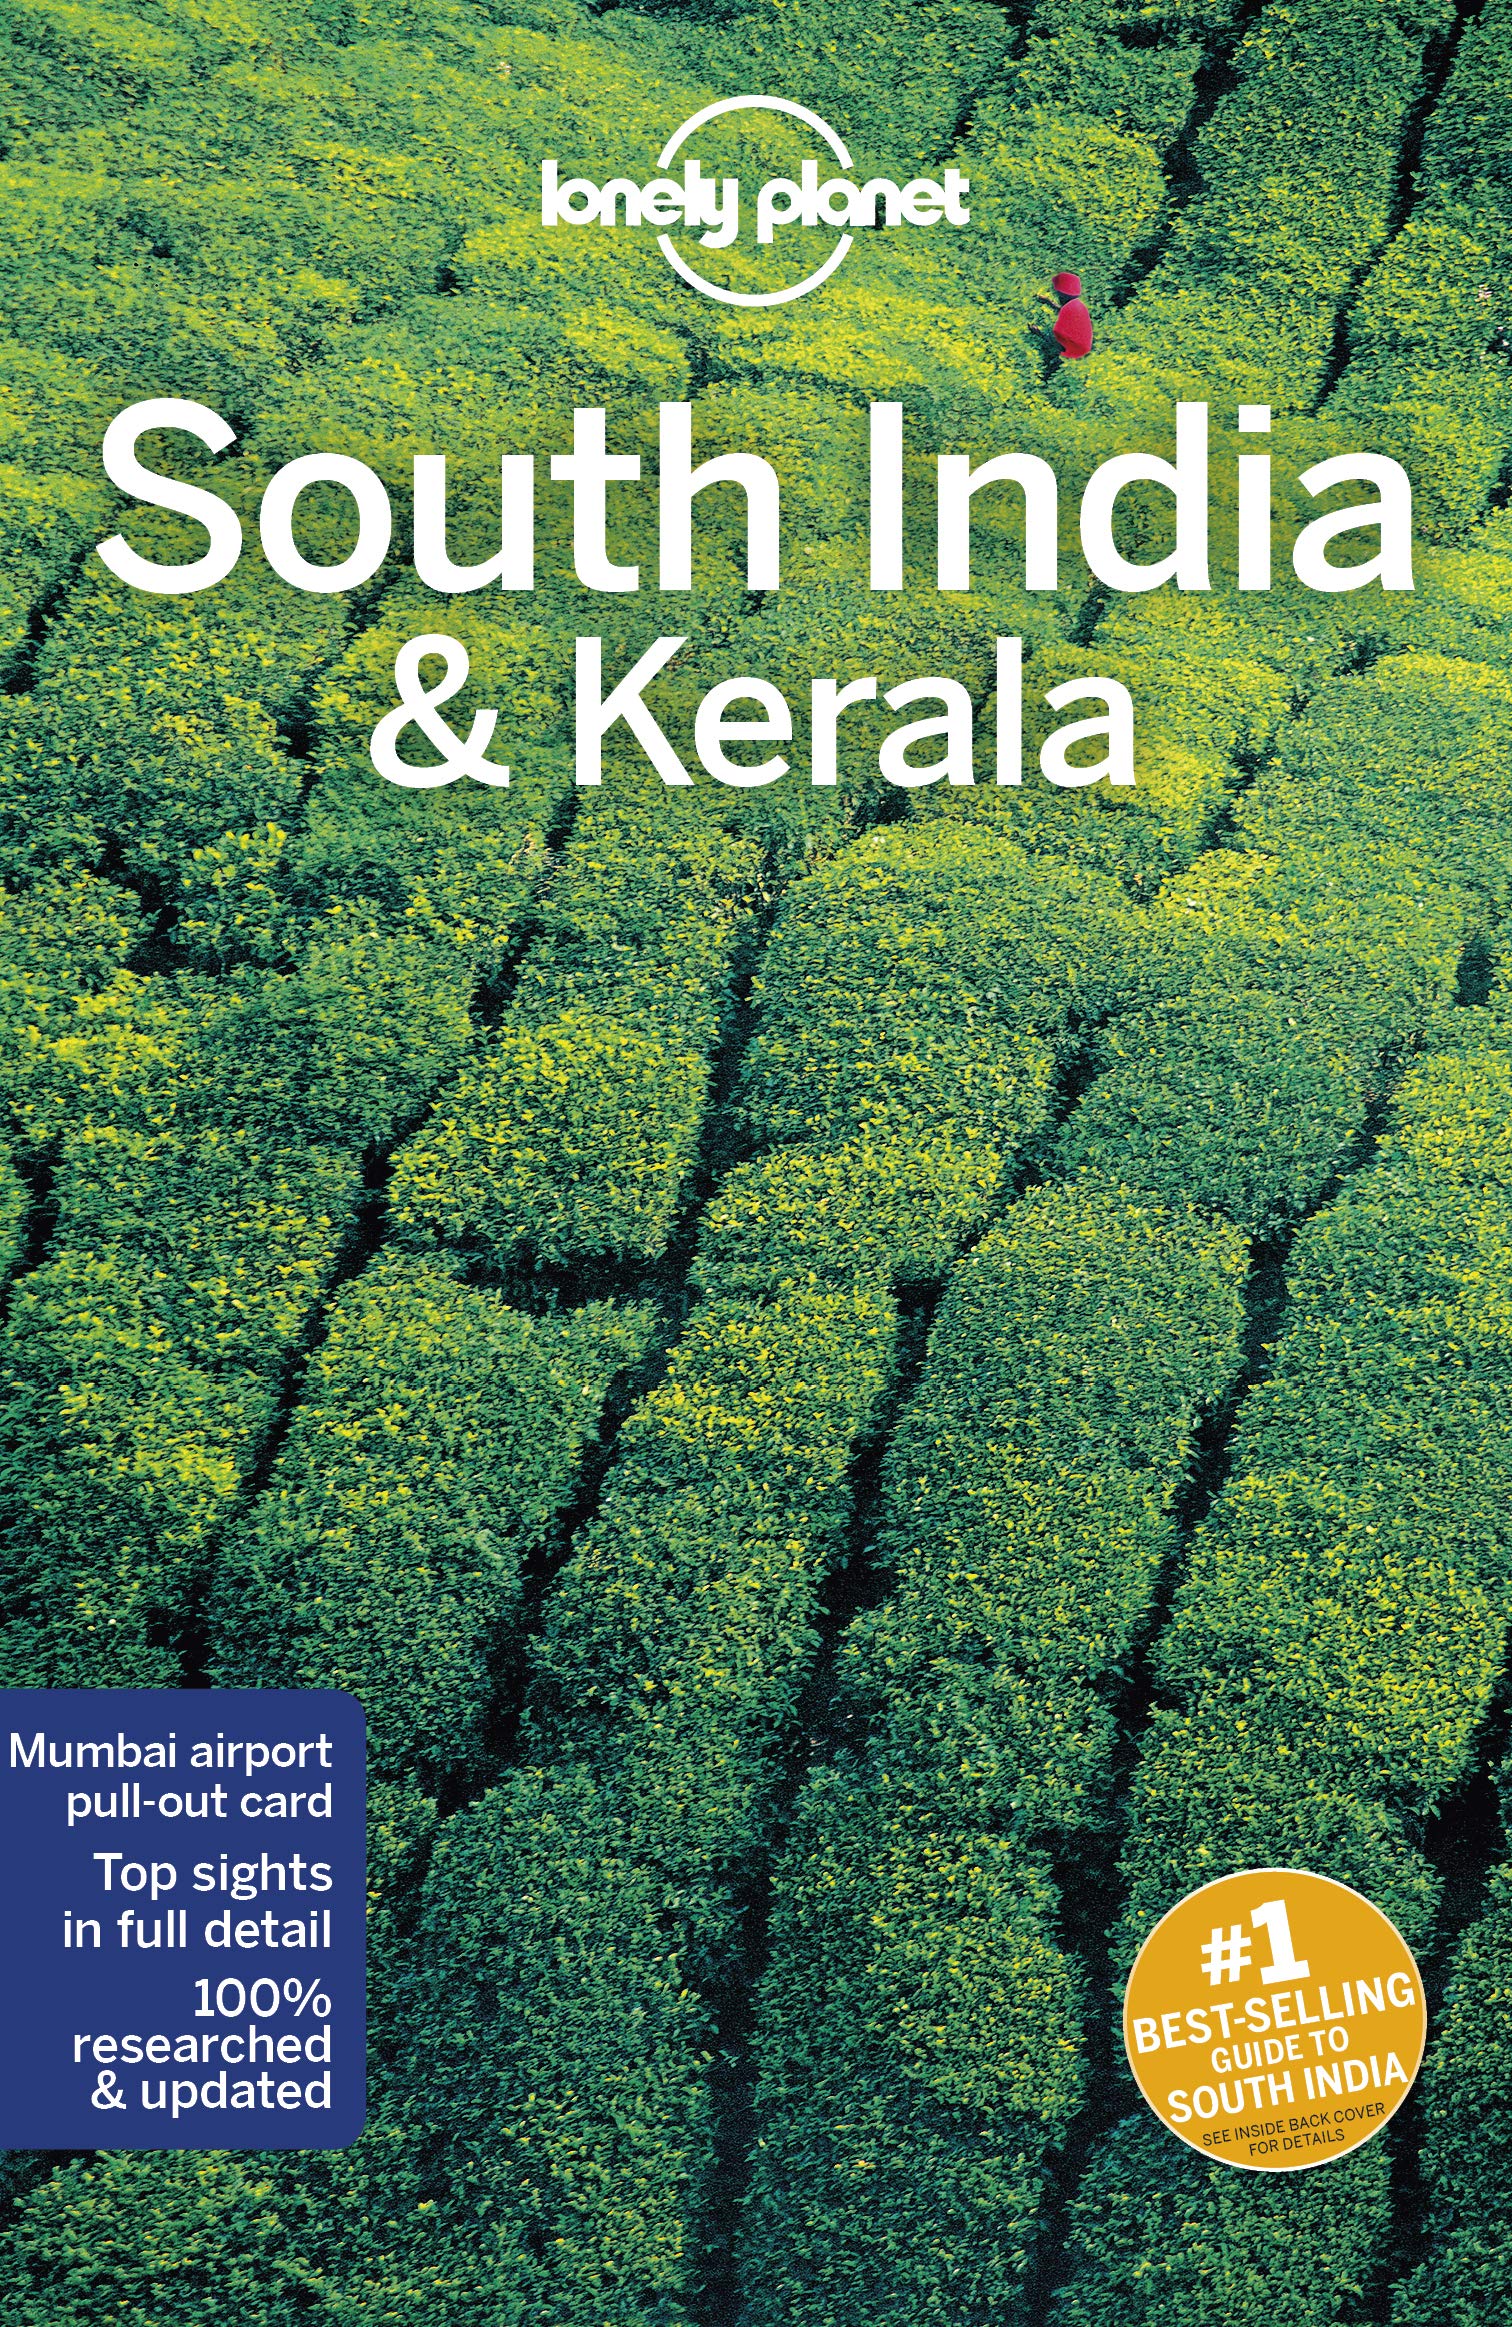 Online bestellen: Reisgids South India & Kerala - Zuid India | Lonely Planet